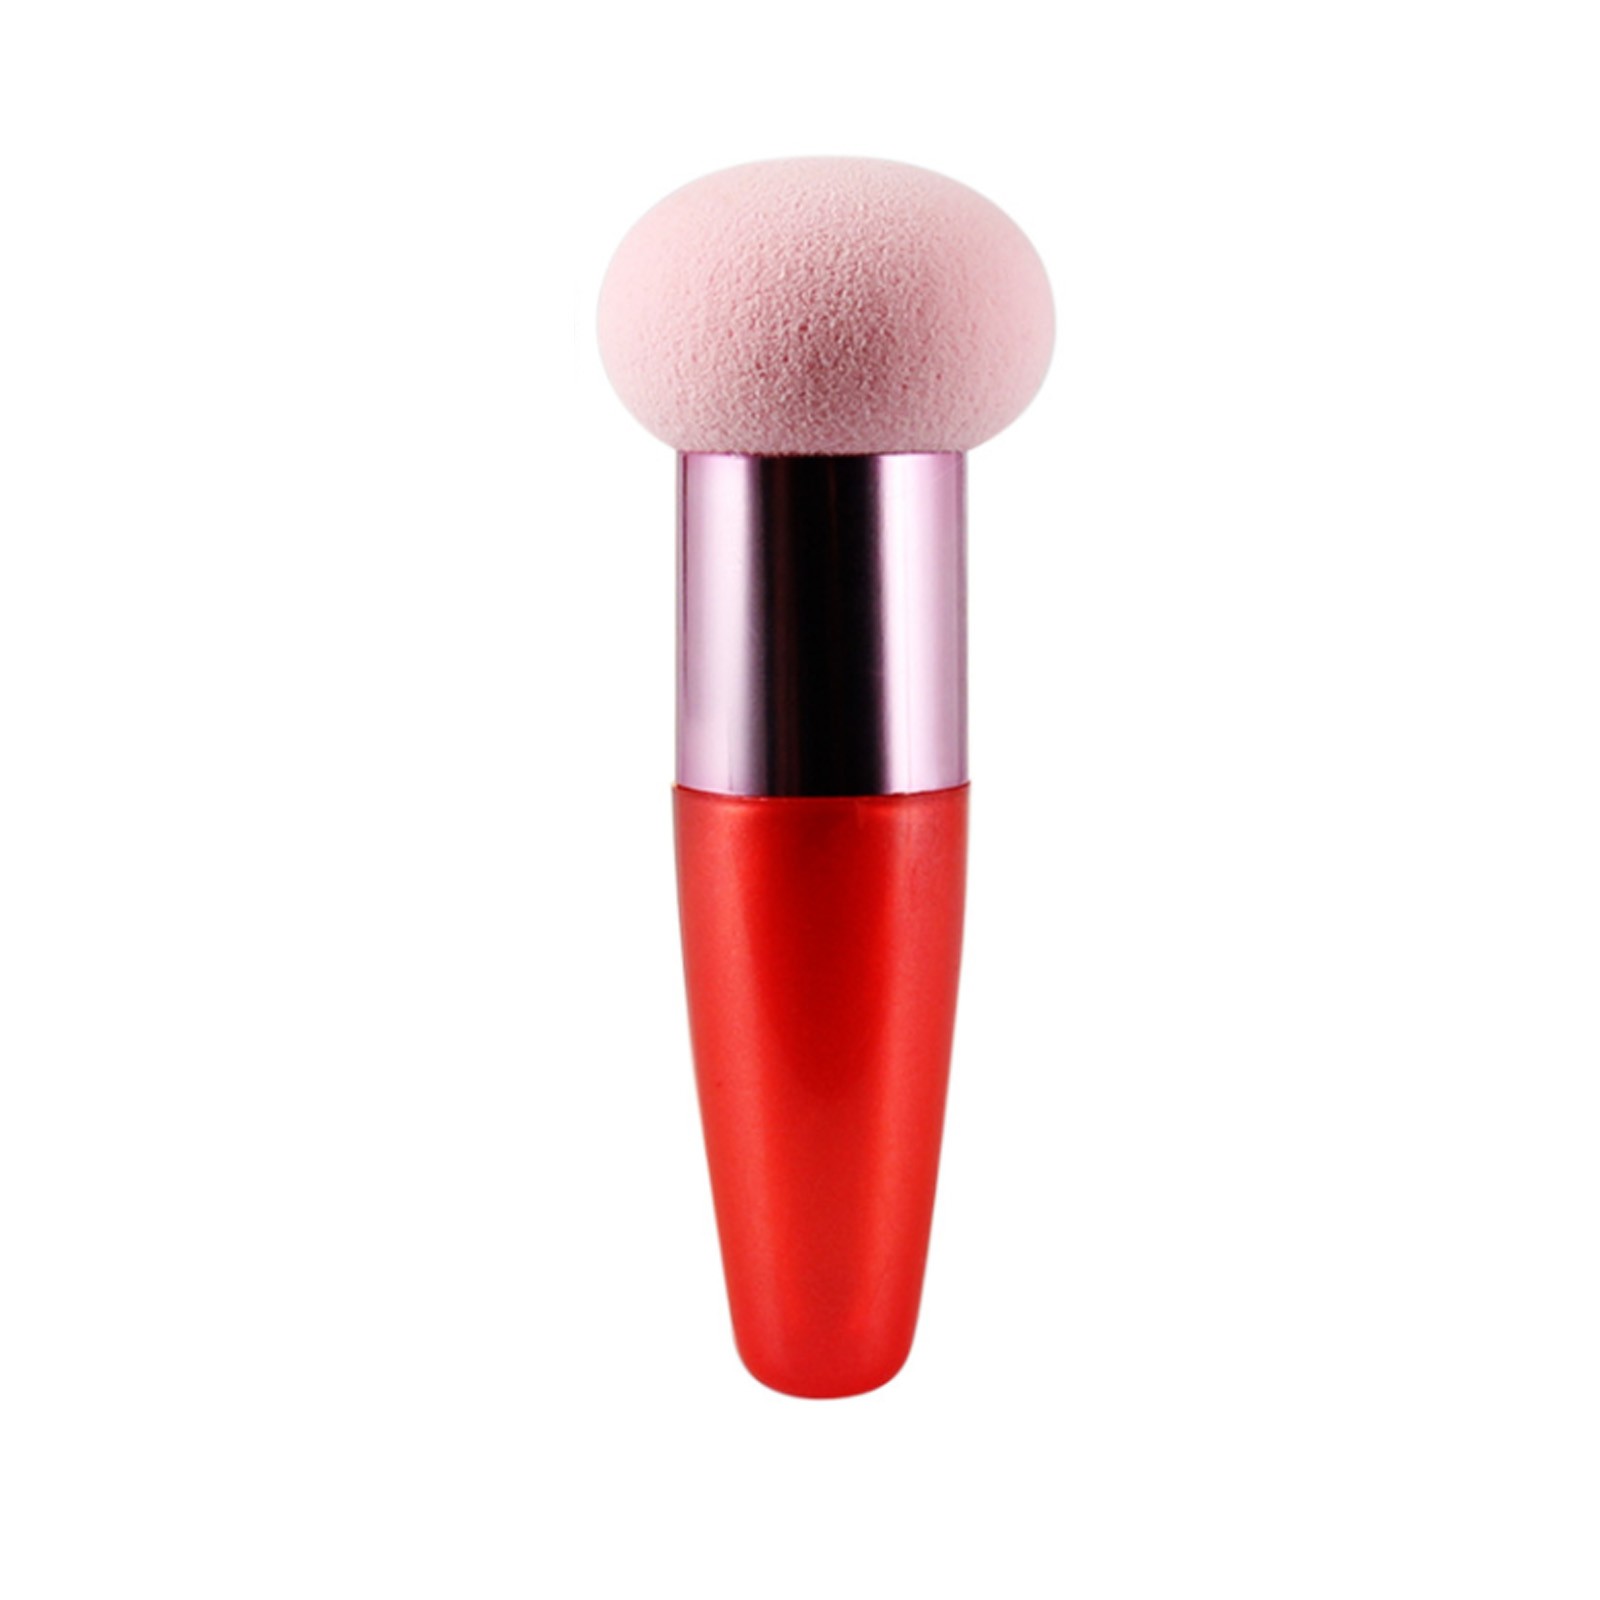 Lollipop Brush Cosmetic Makeup Liquid Cream Foundation Concealer Sponge Lollipop Brush Foundation Brush Makeup